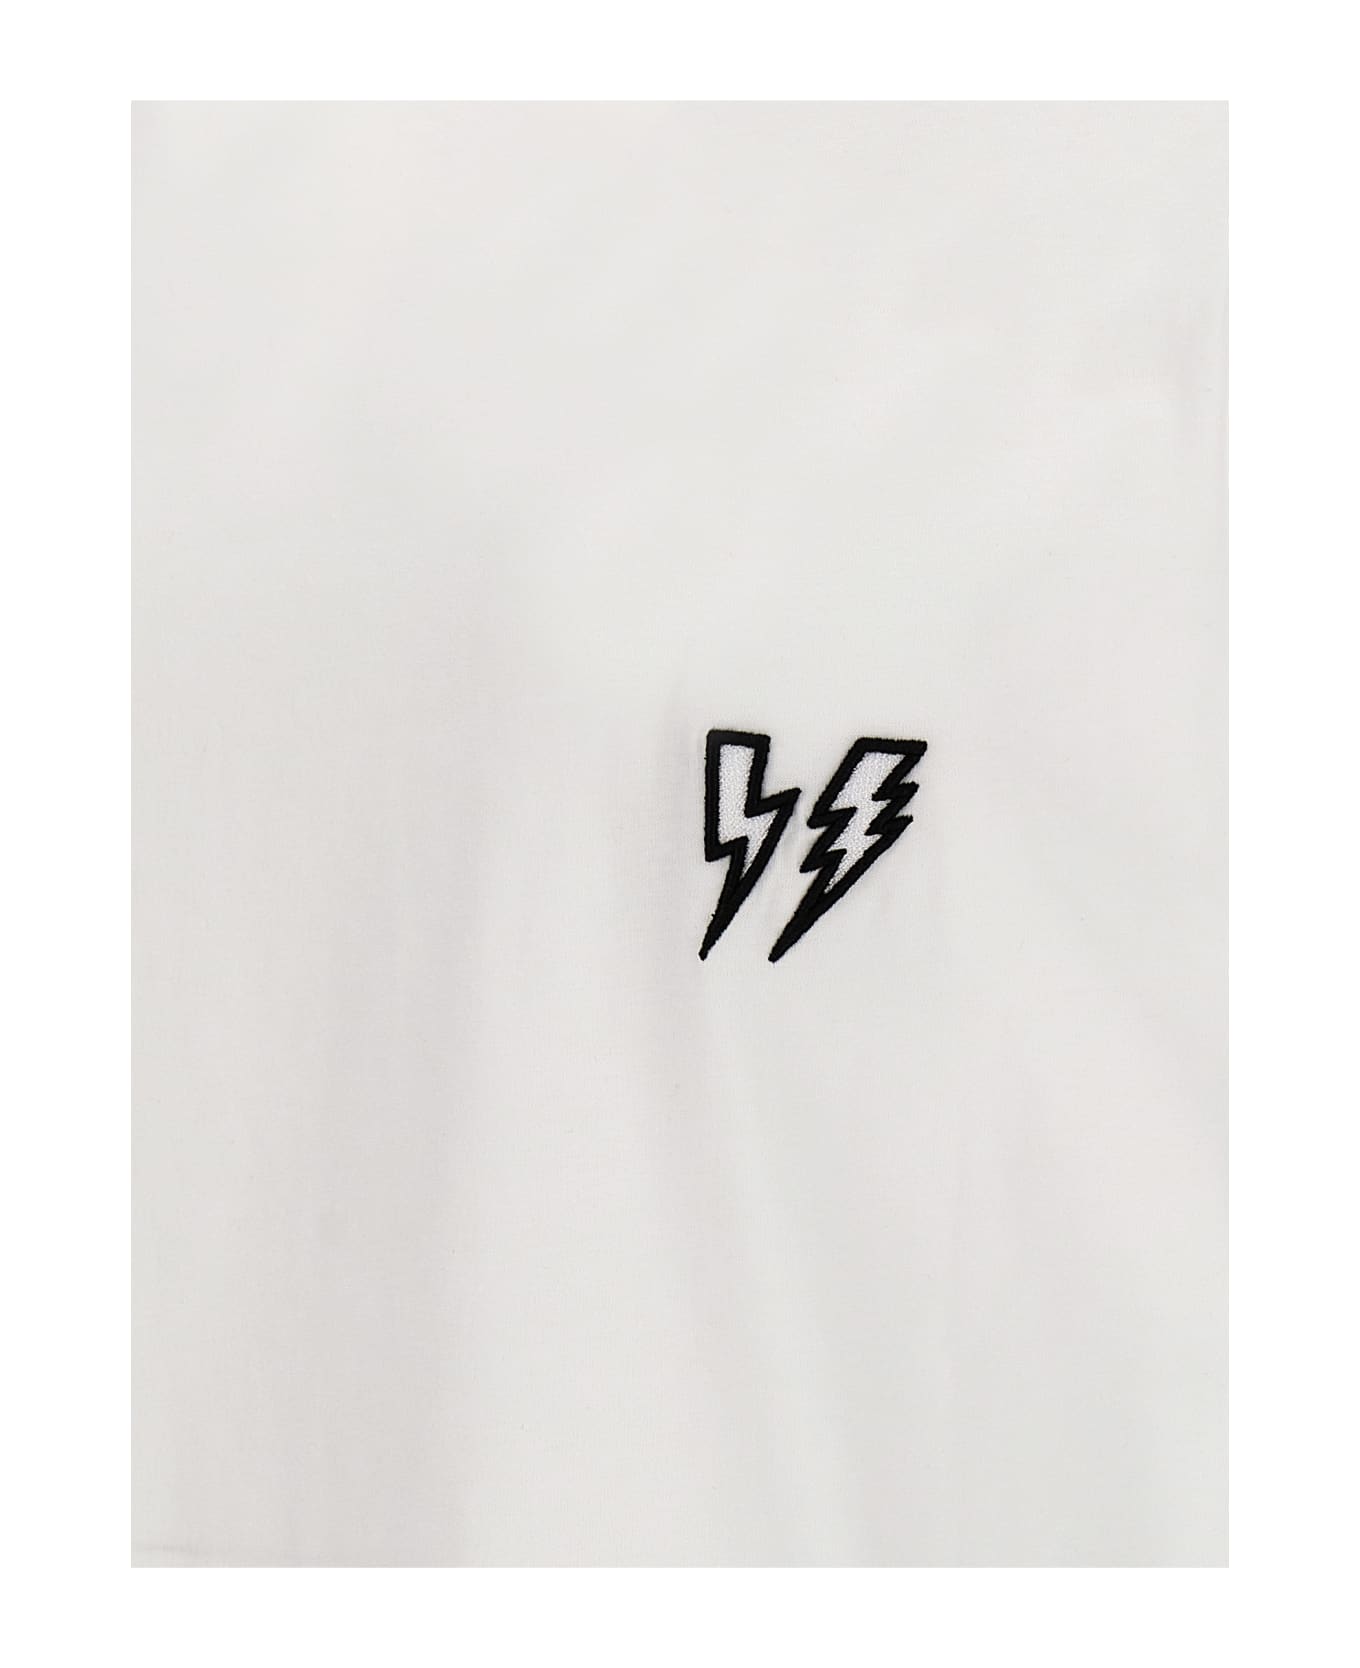 Neil Barrett Logo Embroidery T-shirt - White/Black シャツ